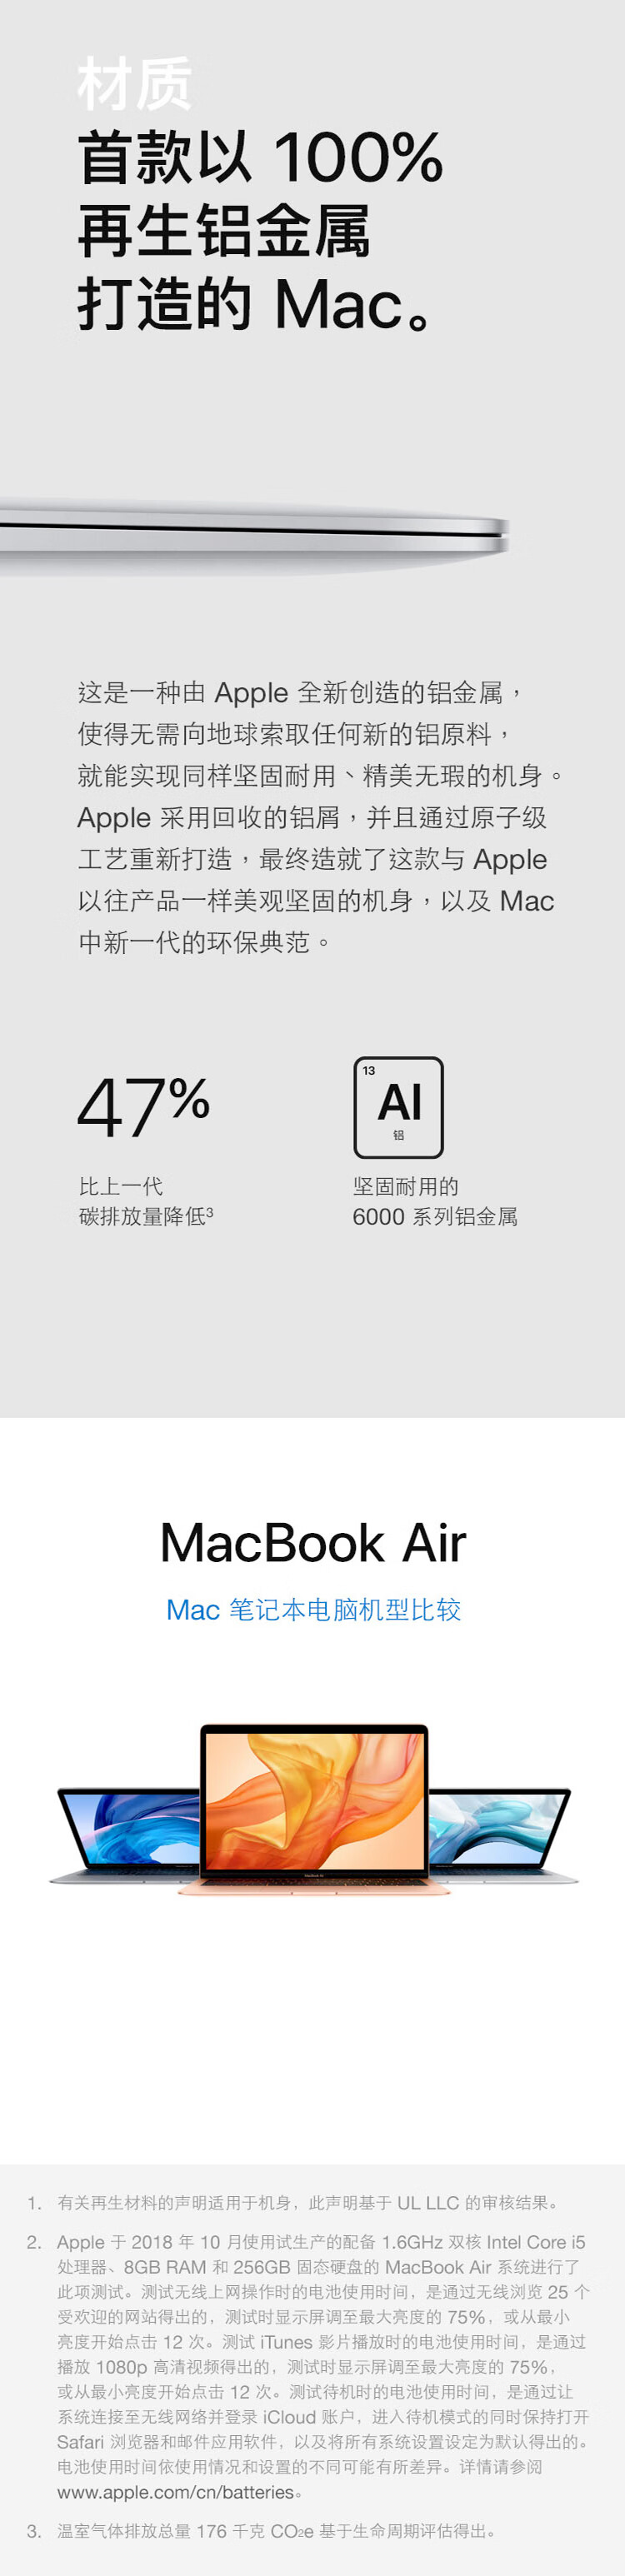 Apple MacBook Air 13.3英寸八代Core i5 /8GB内存/128GB闪存 笔记本电脑 金色 2018款Retina屏 MREE2CH/A)